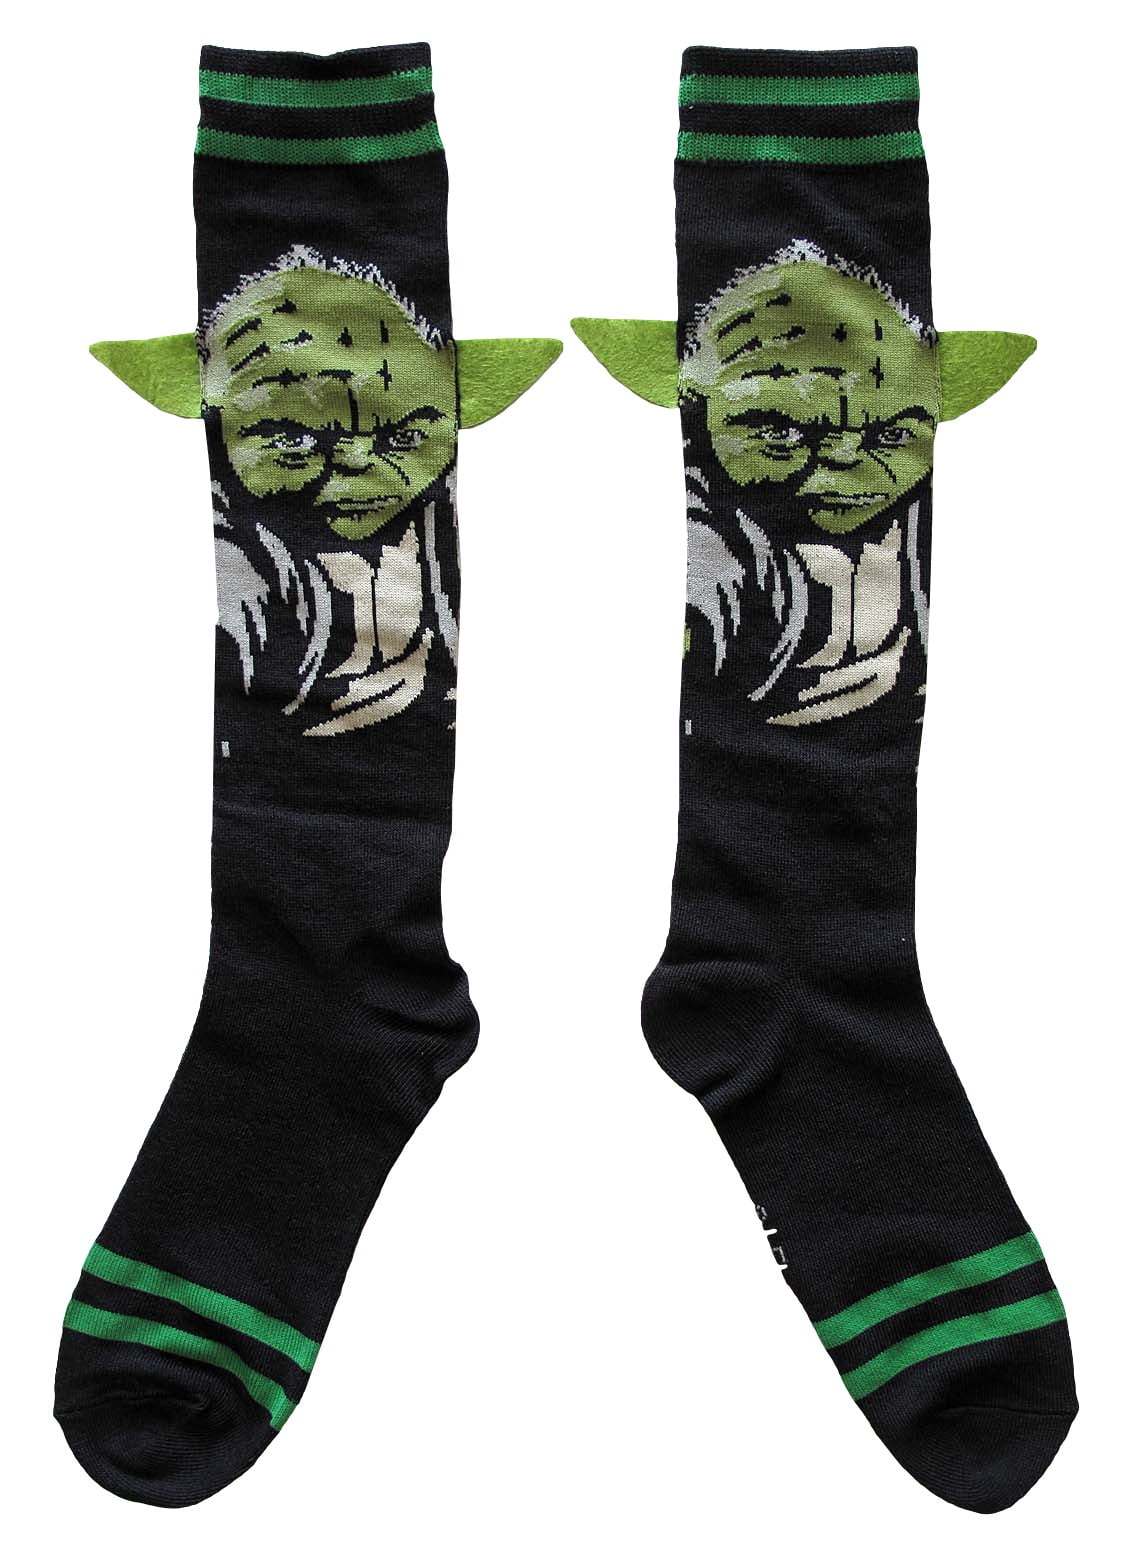 star wars knee high socks